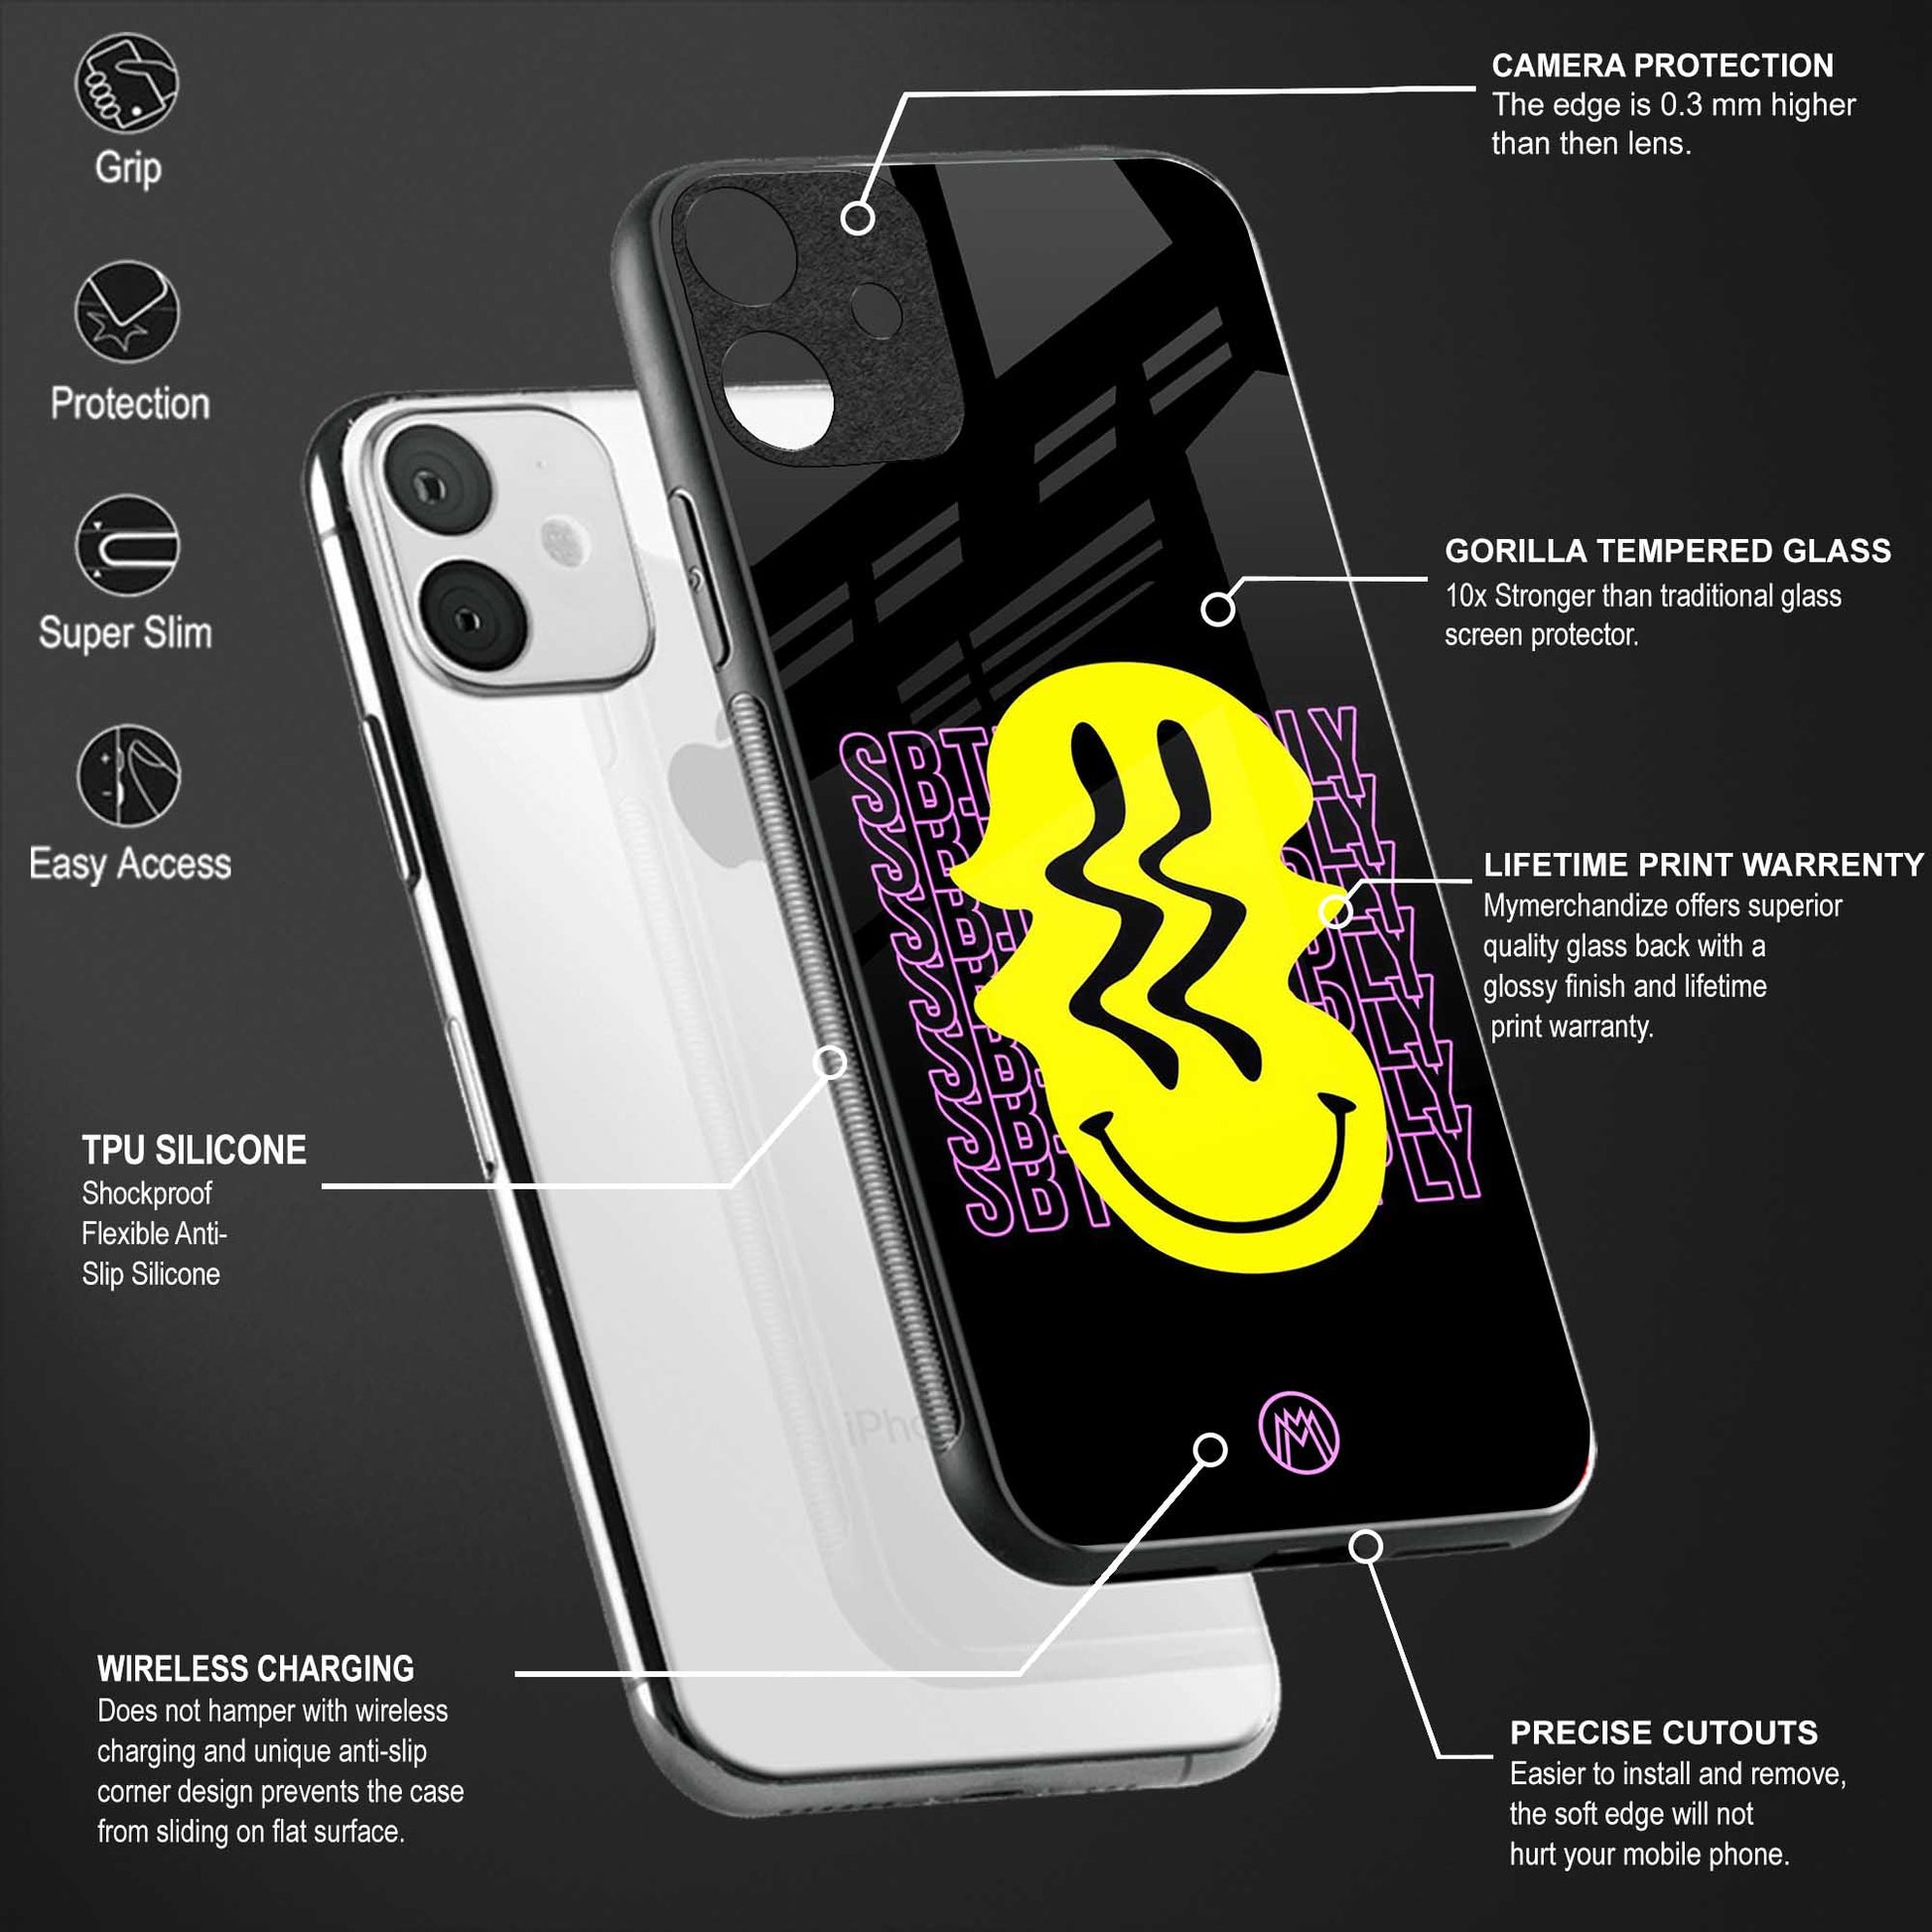 melt smile back phone cover | glass case for oppo reno 5